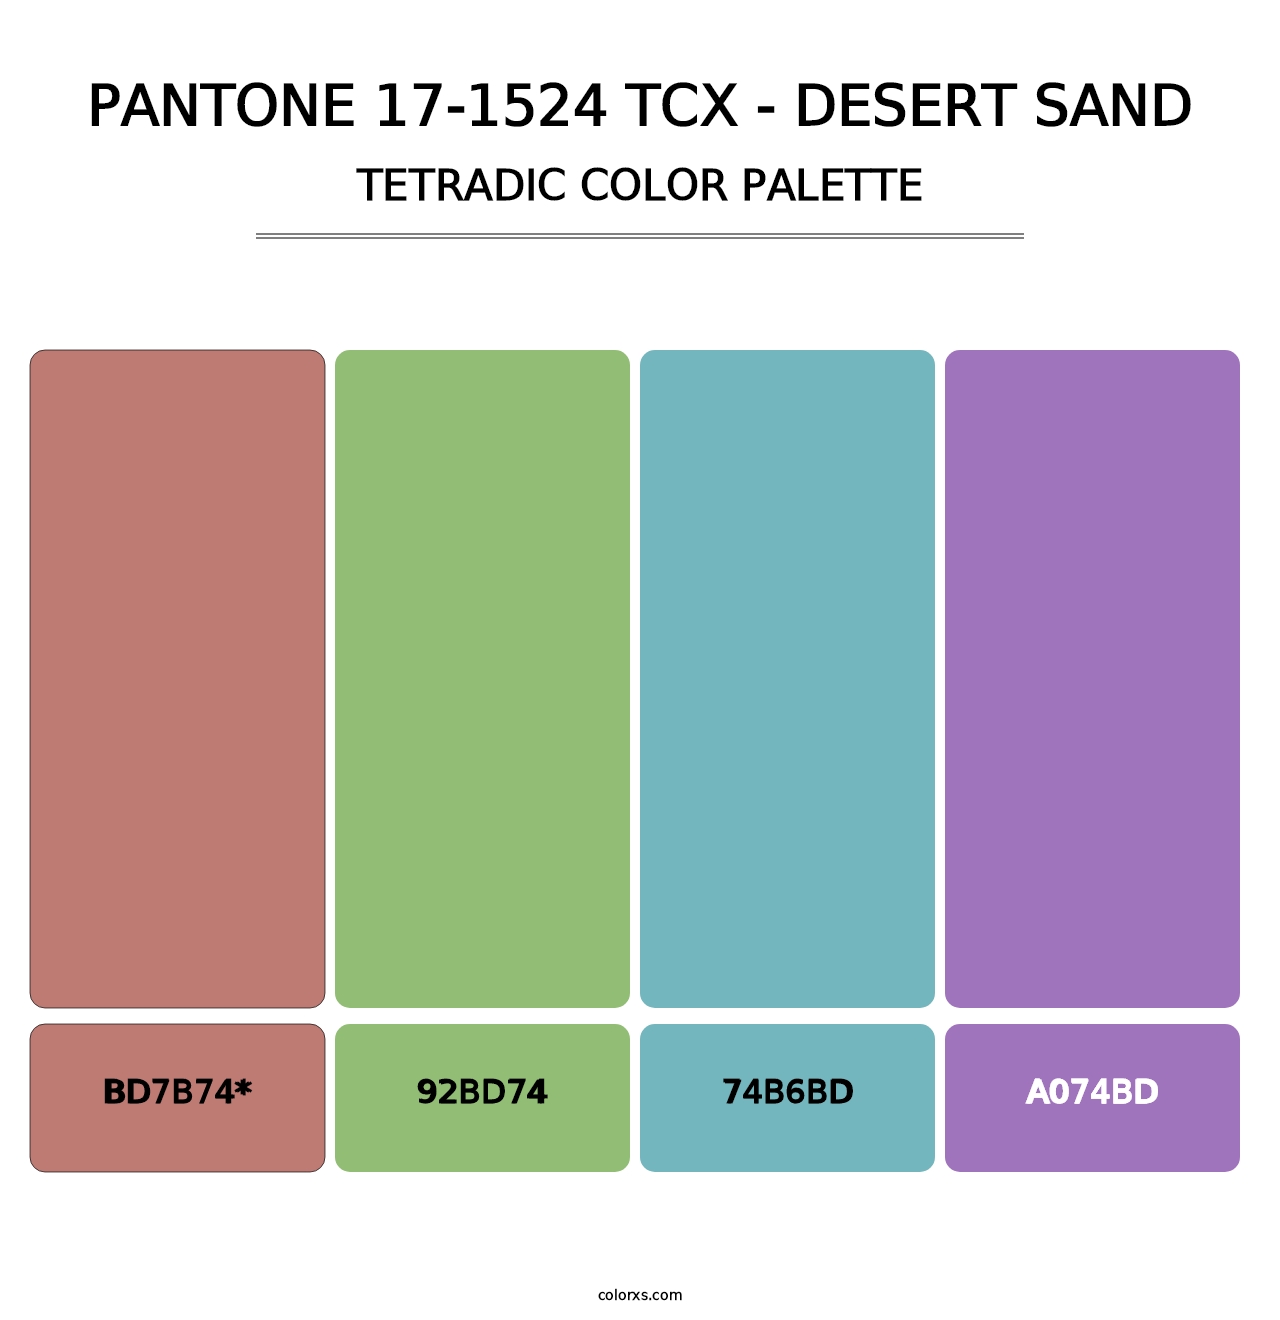 PANTONE 17-1524 TCX - Desert Sand - Tetradic Color Palette